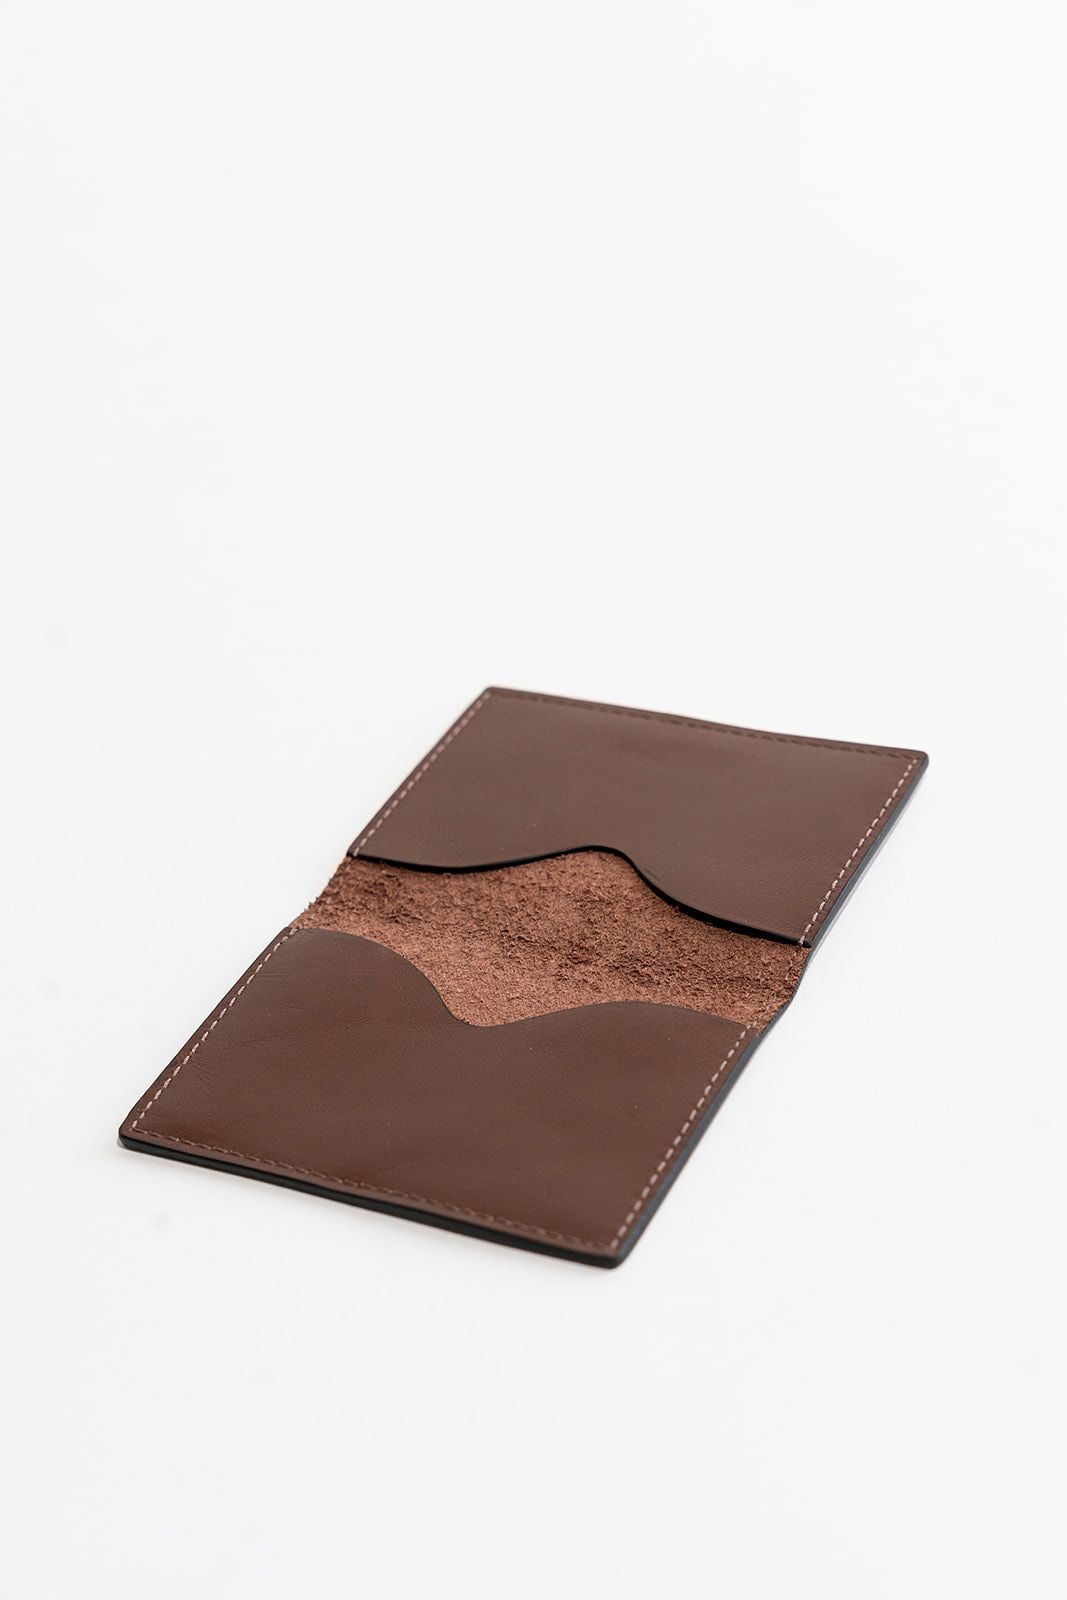 1776 Slim Card Holder | Signature Brown Leather Wallet